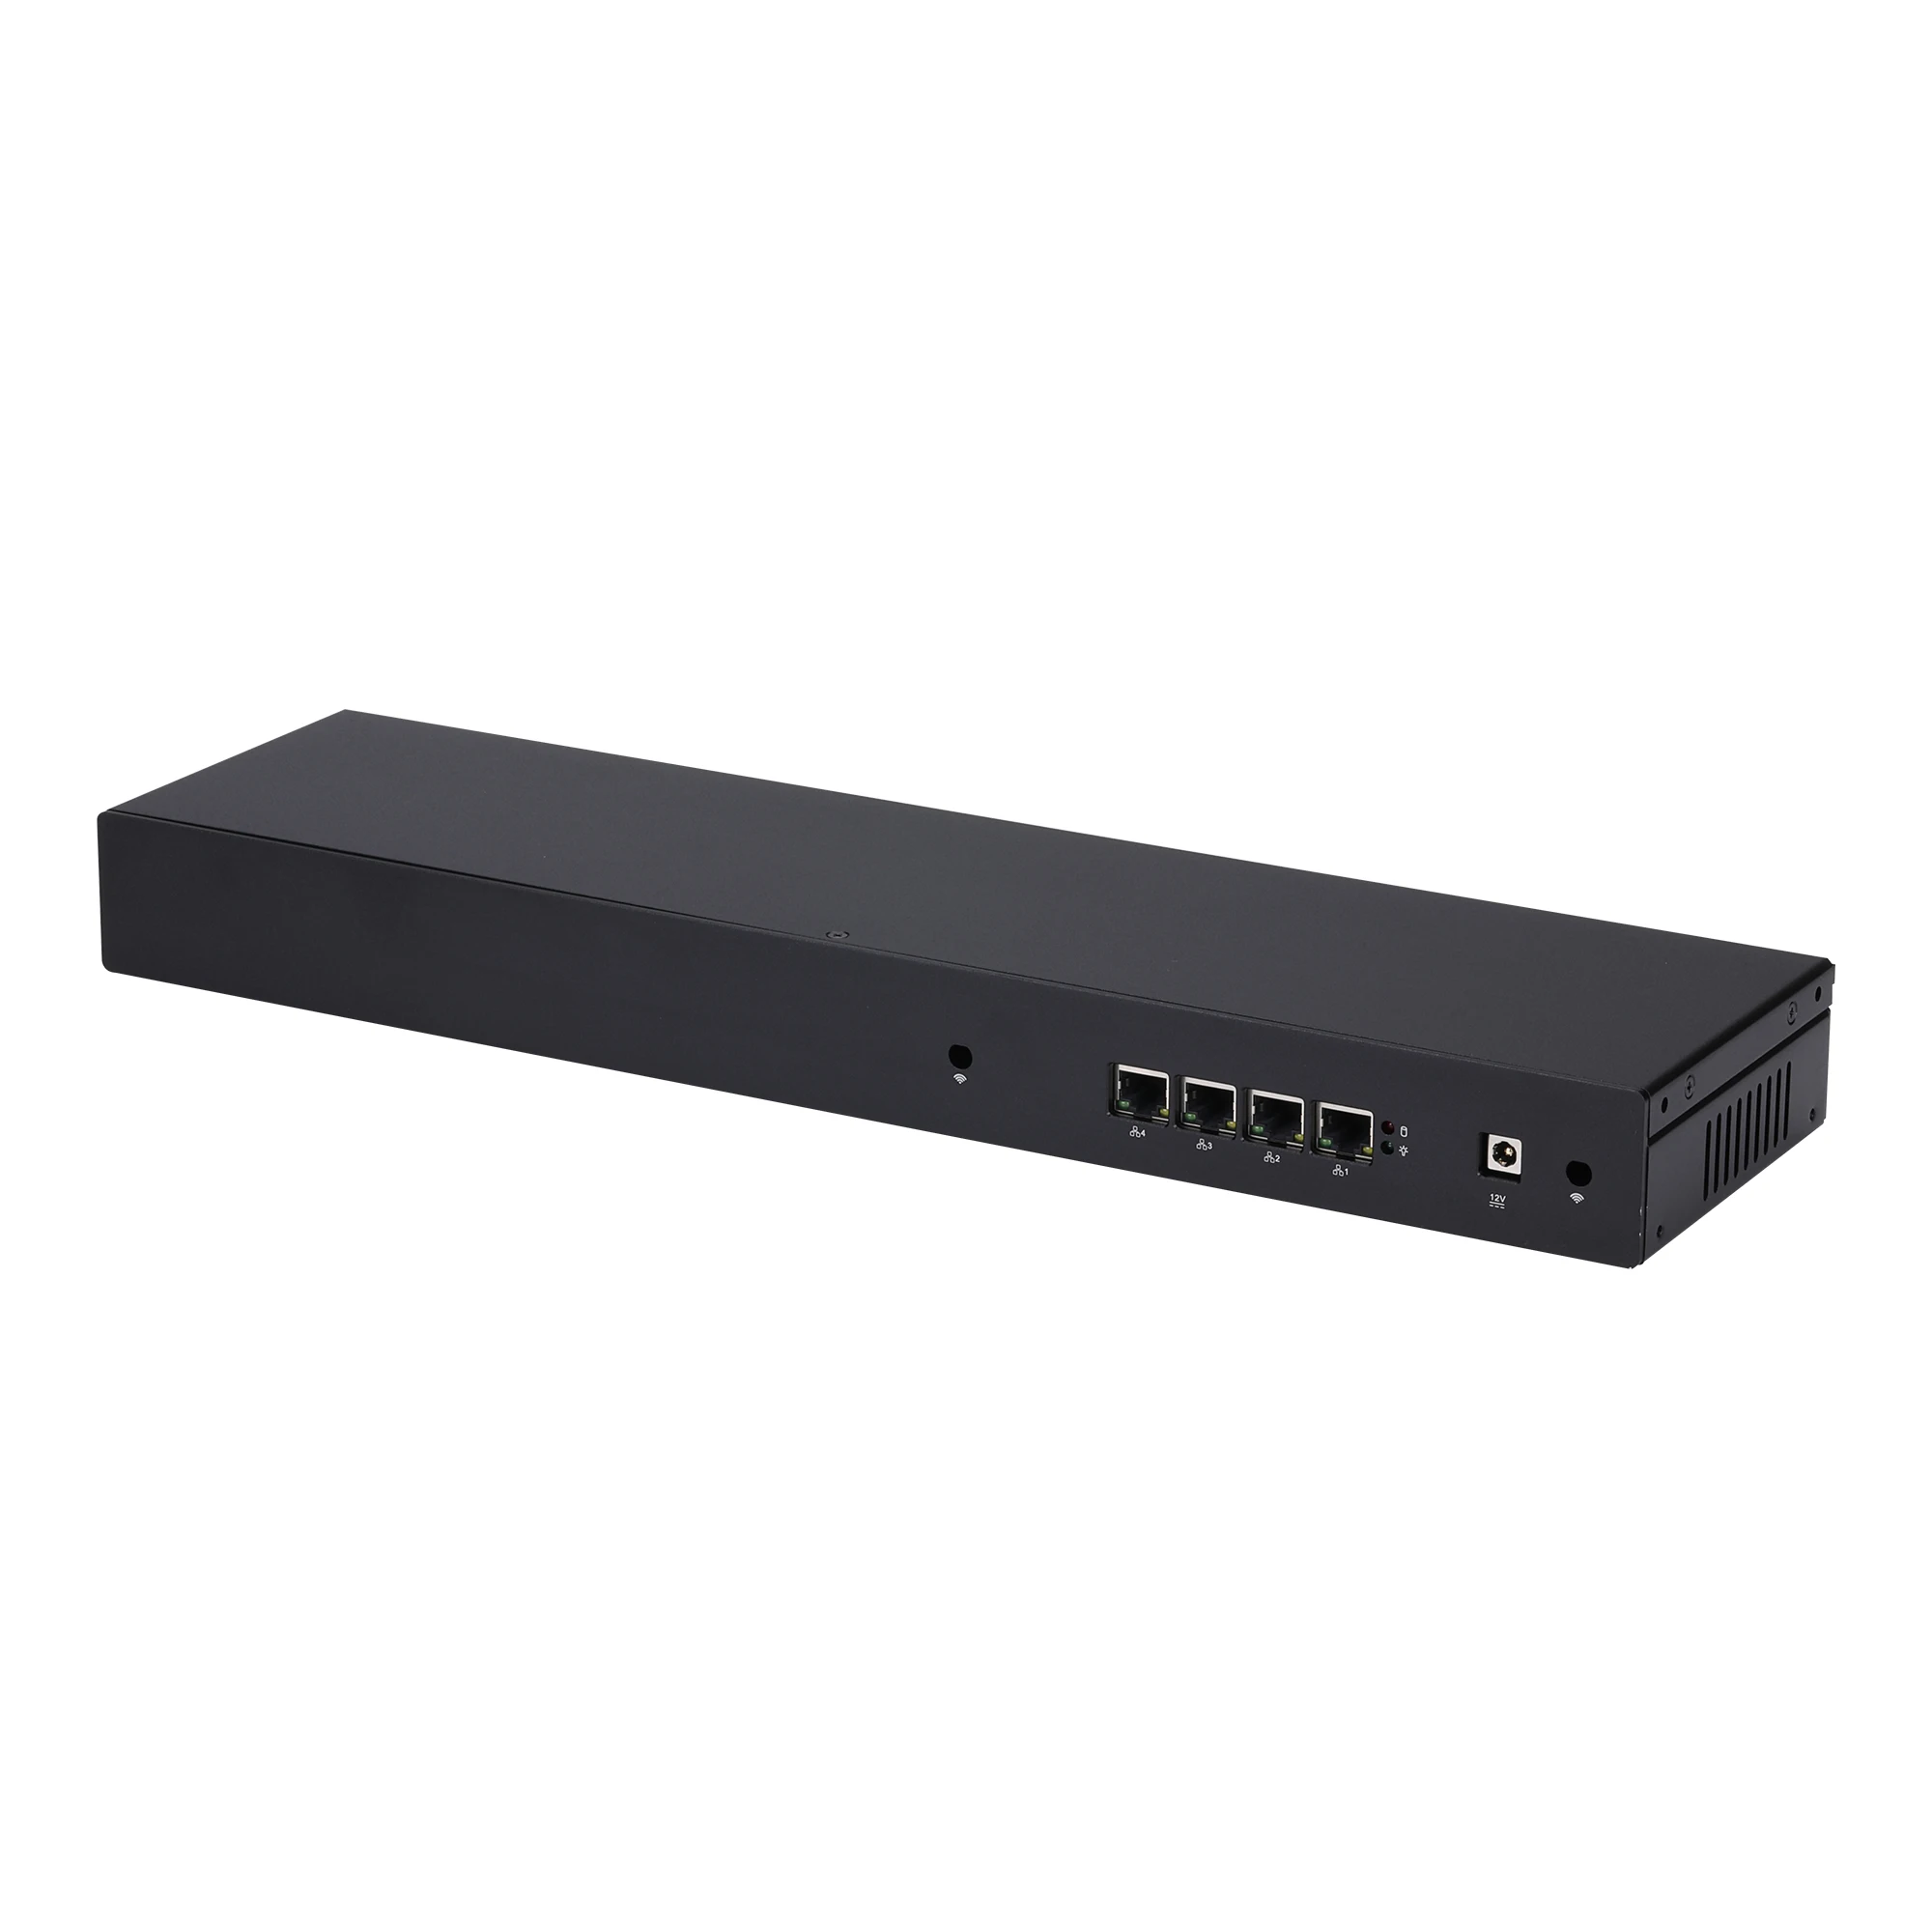 Qotom 4 LAN Port 1u Rack Micro Appliance Router Firewall q335g4-Core i3 5005u